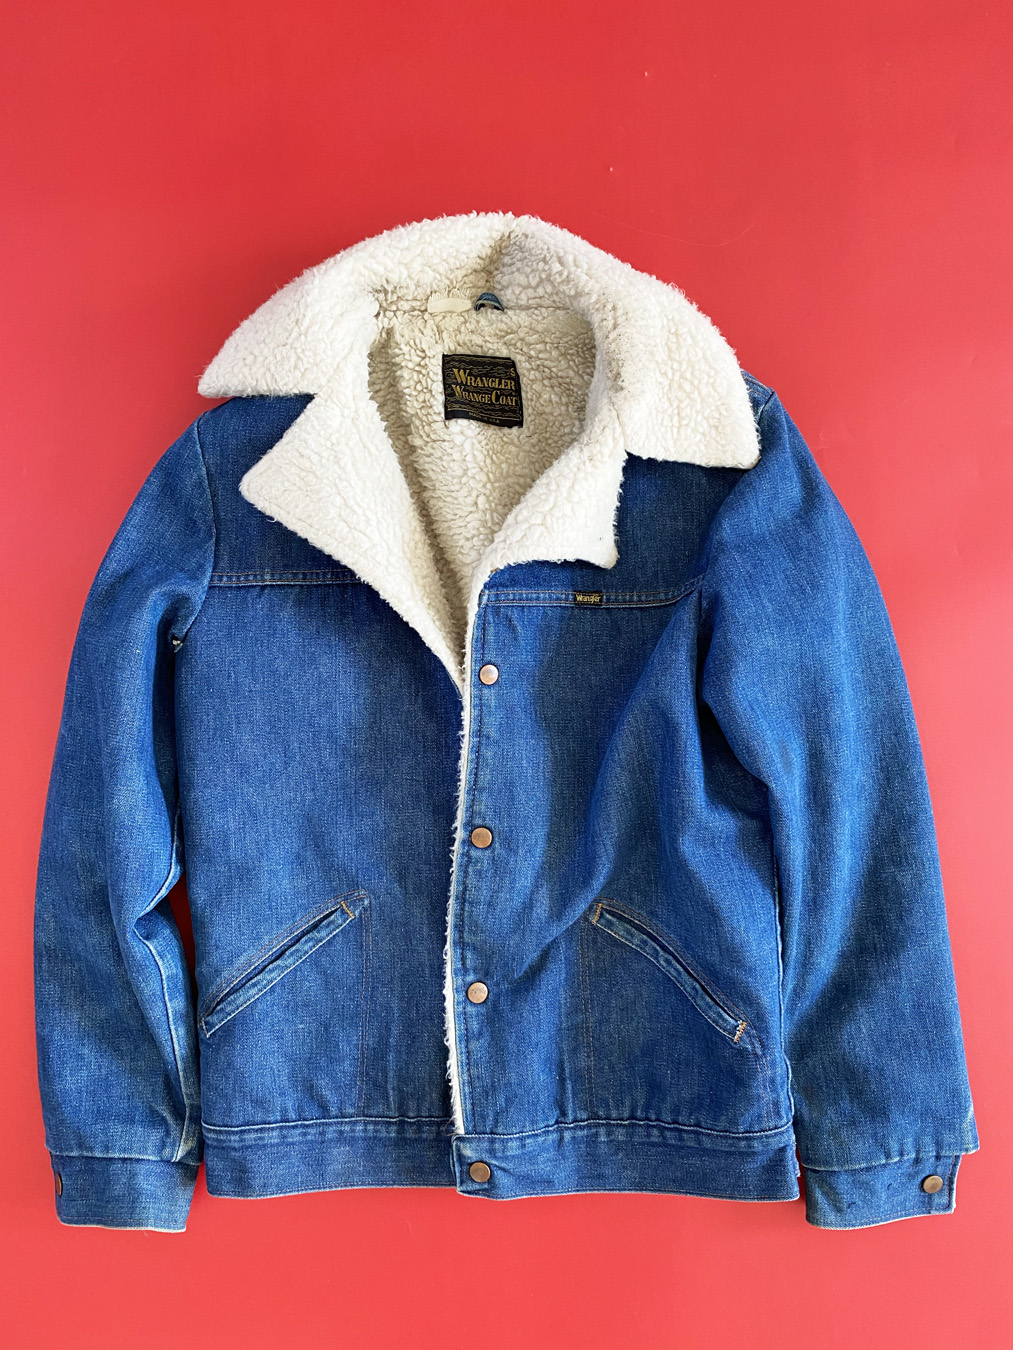 80s Wrangler Wrange Coat Sherpa Jacket - 5 Star Vintage